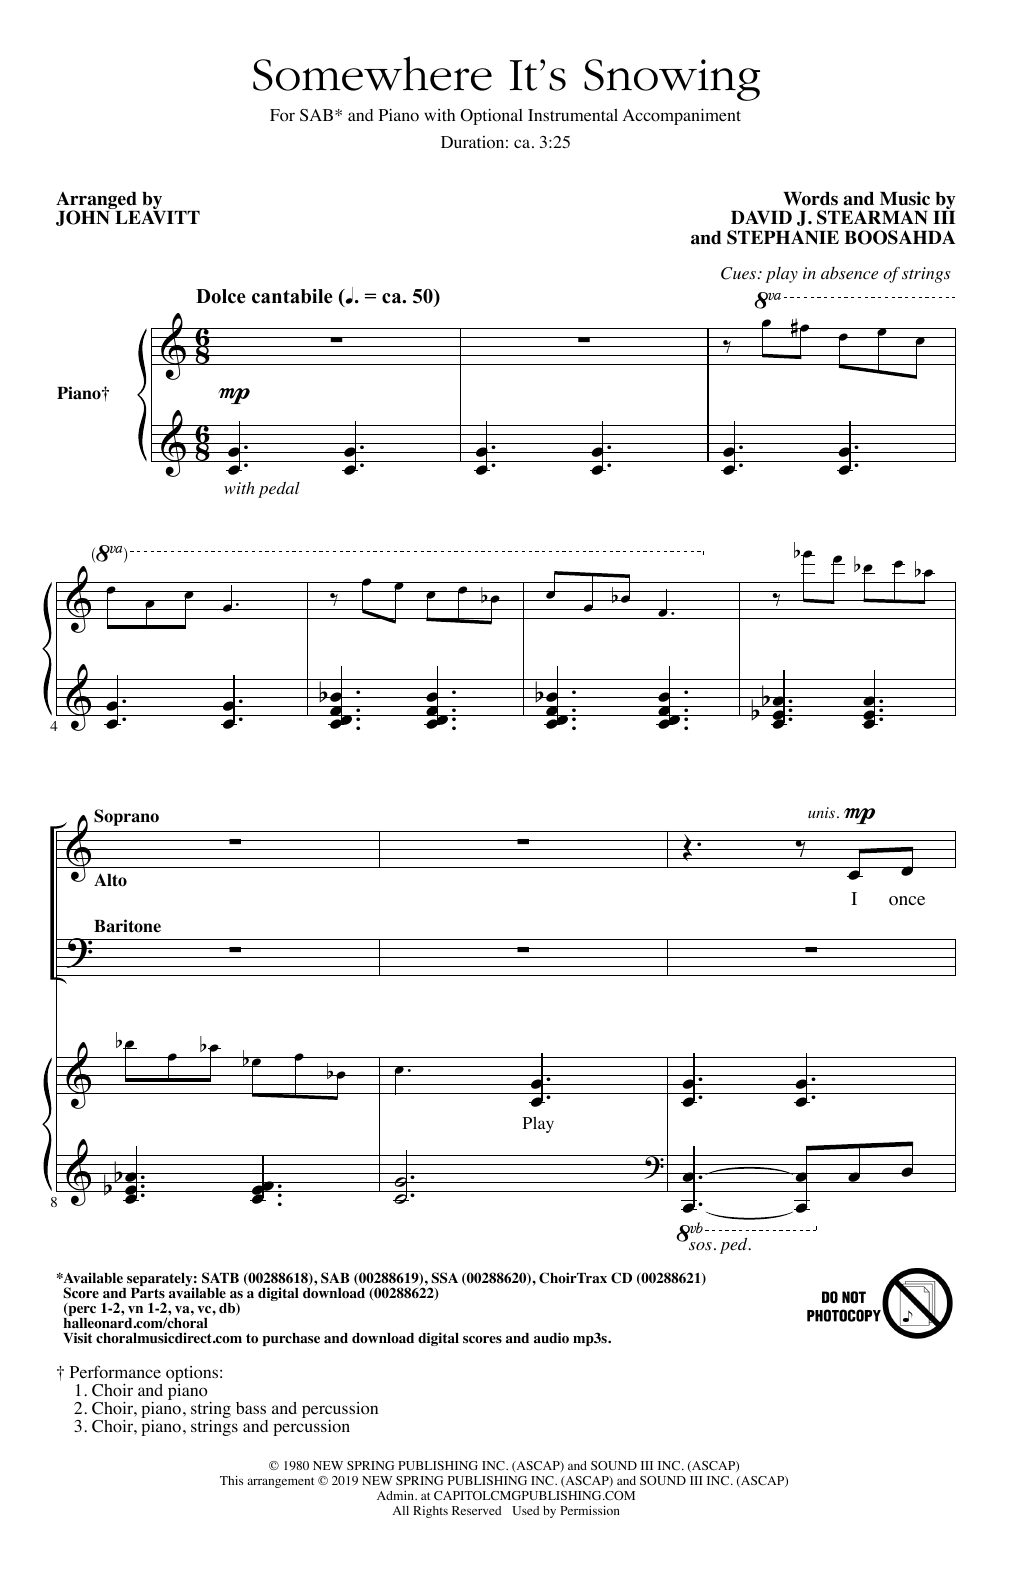 David J. Stearman III & Stephanie Boosahda Somewhere It's Snowing (arr. John Leavitt) Sheet Music Notes & Chords for SSA Choir - Download or Print PDF